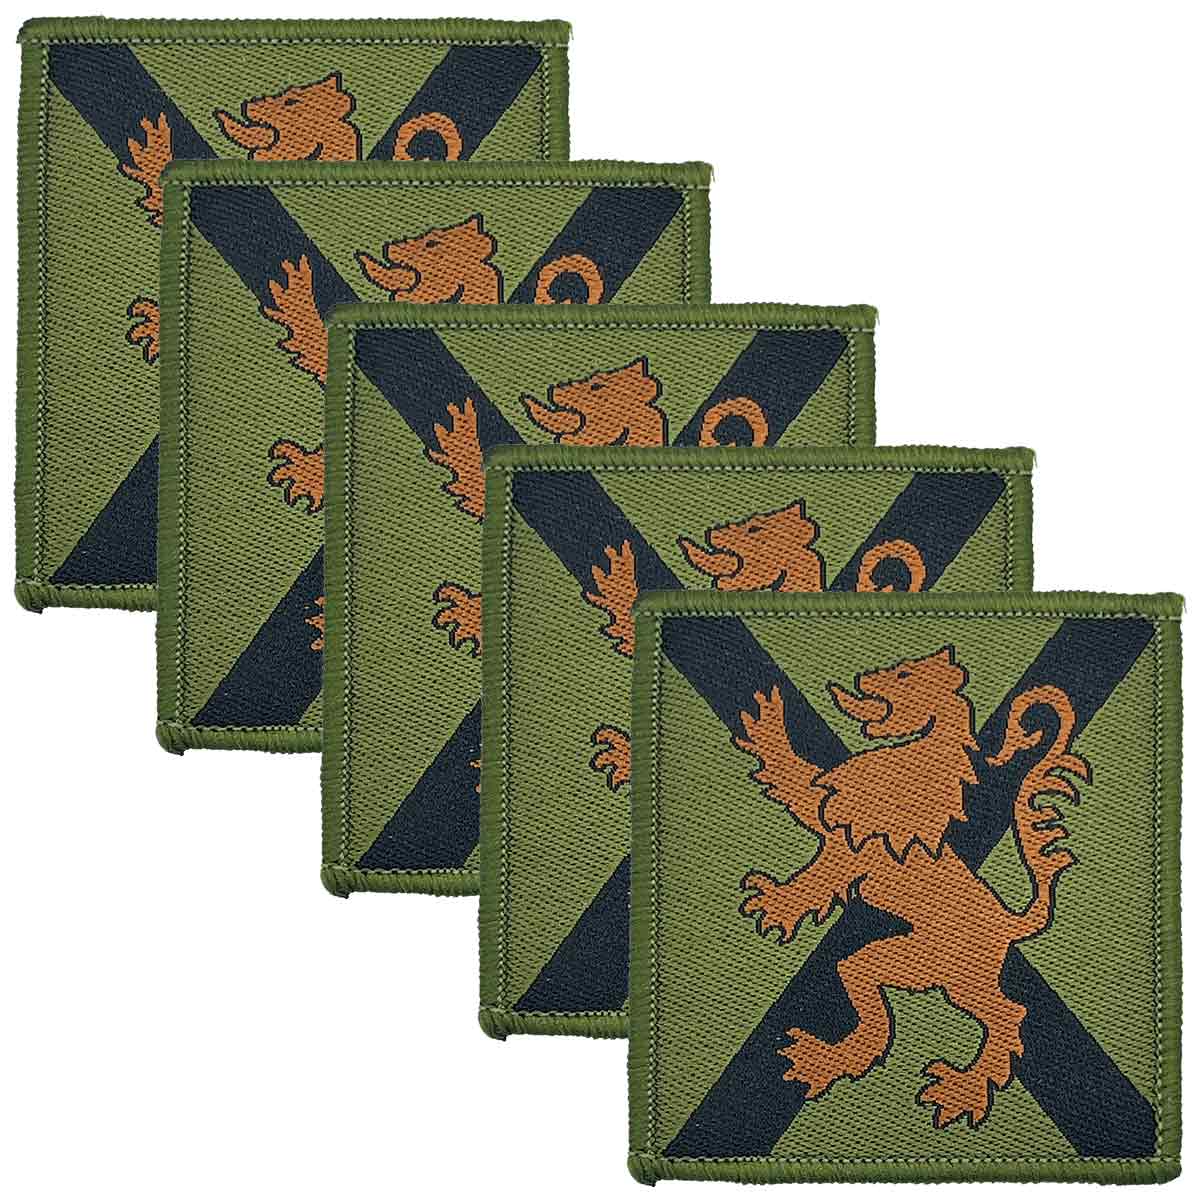 Royal Regiment of Scotland TRF - Iron or Sewn On Flash - John Bull Clothing